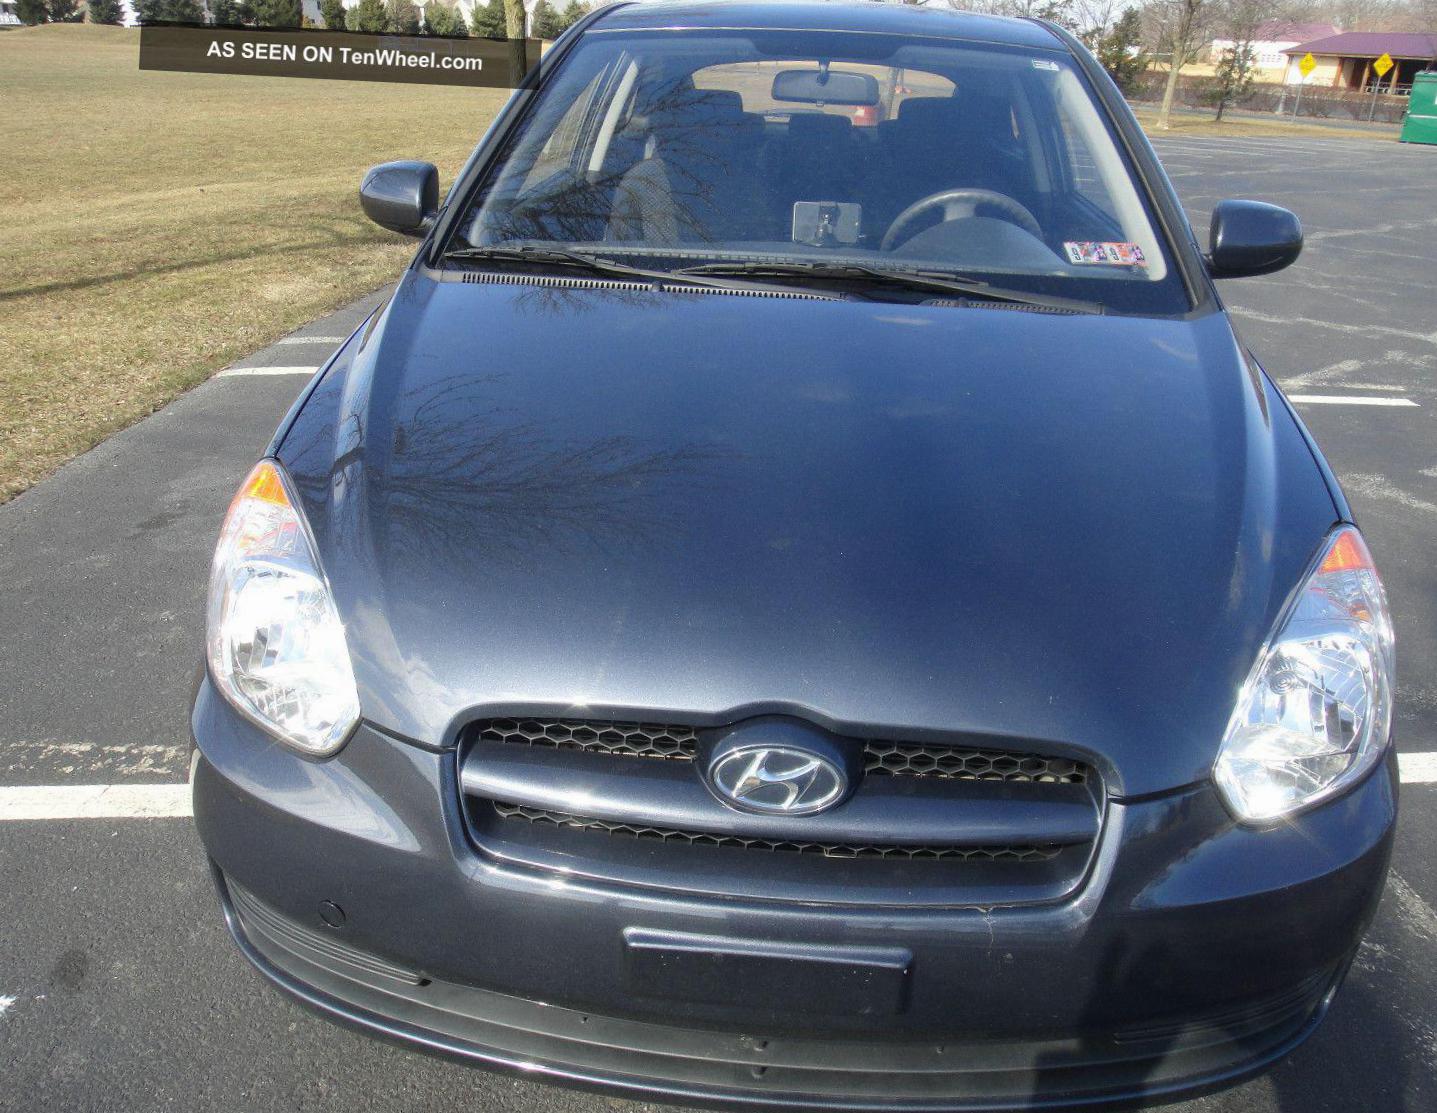 Accent Hatchback Hyundai lease 2010